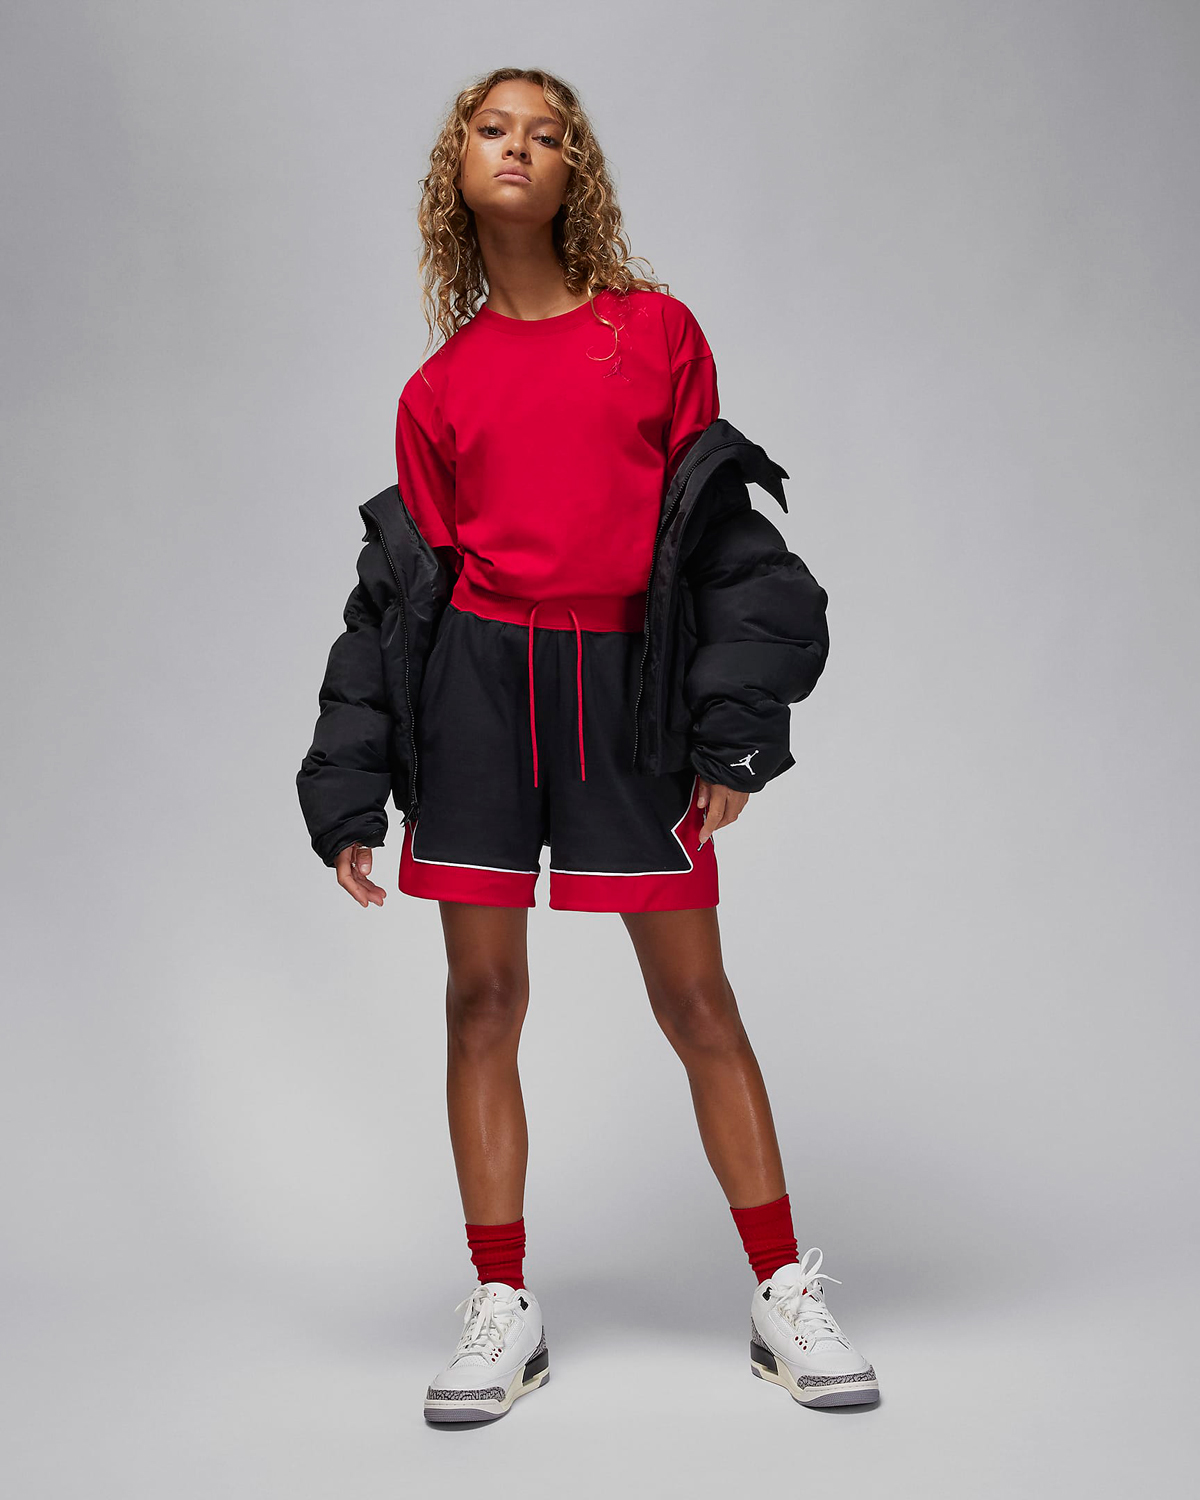 Jordan-Essentials-Womens-T-Shirt-Top-Gym-Red-Outfit